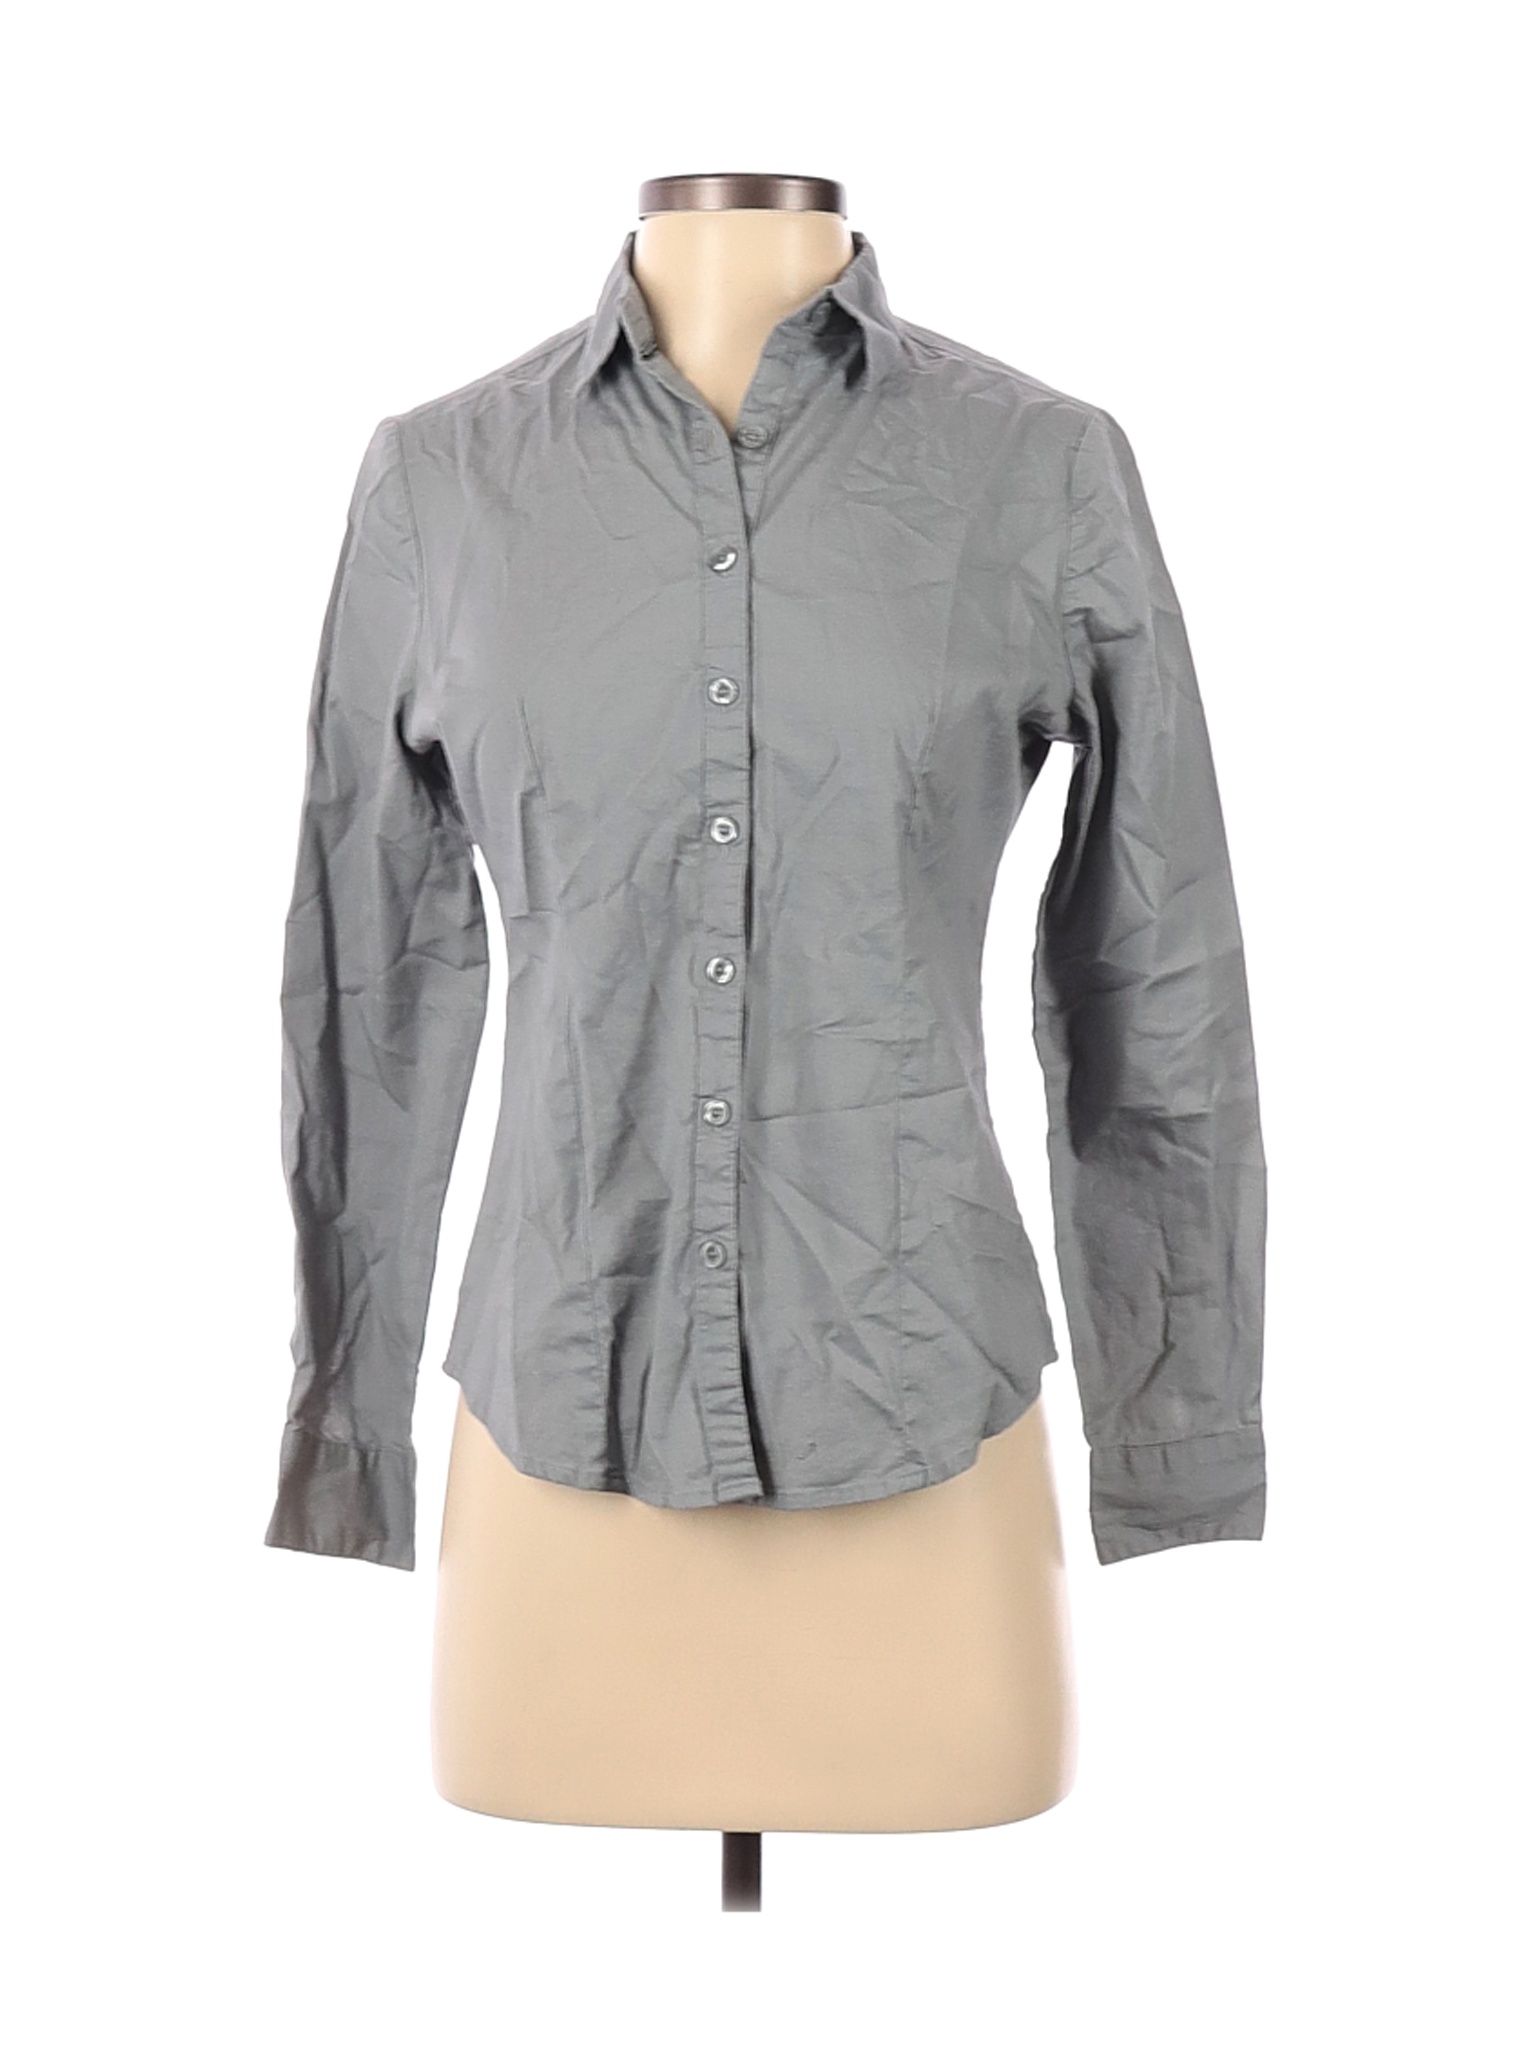 Harve Benard Women Gray Long Sleeve Button-Down Shirt S | eBay